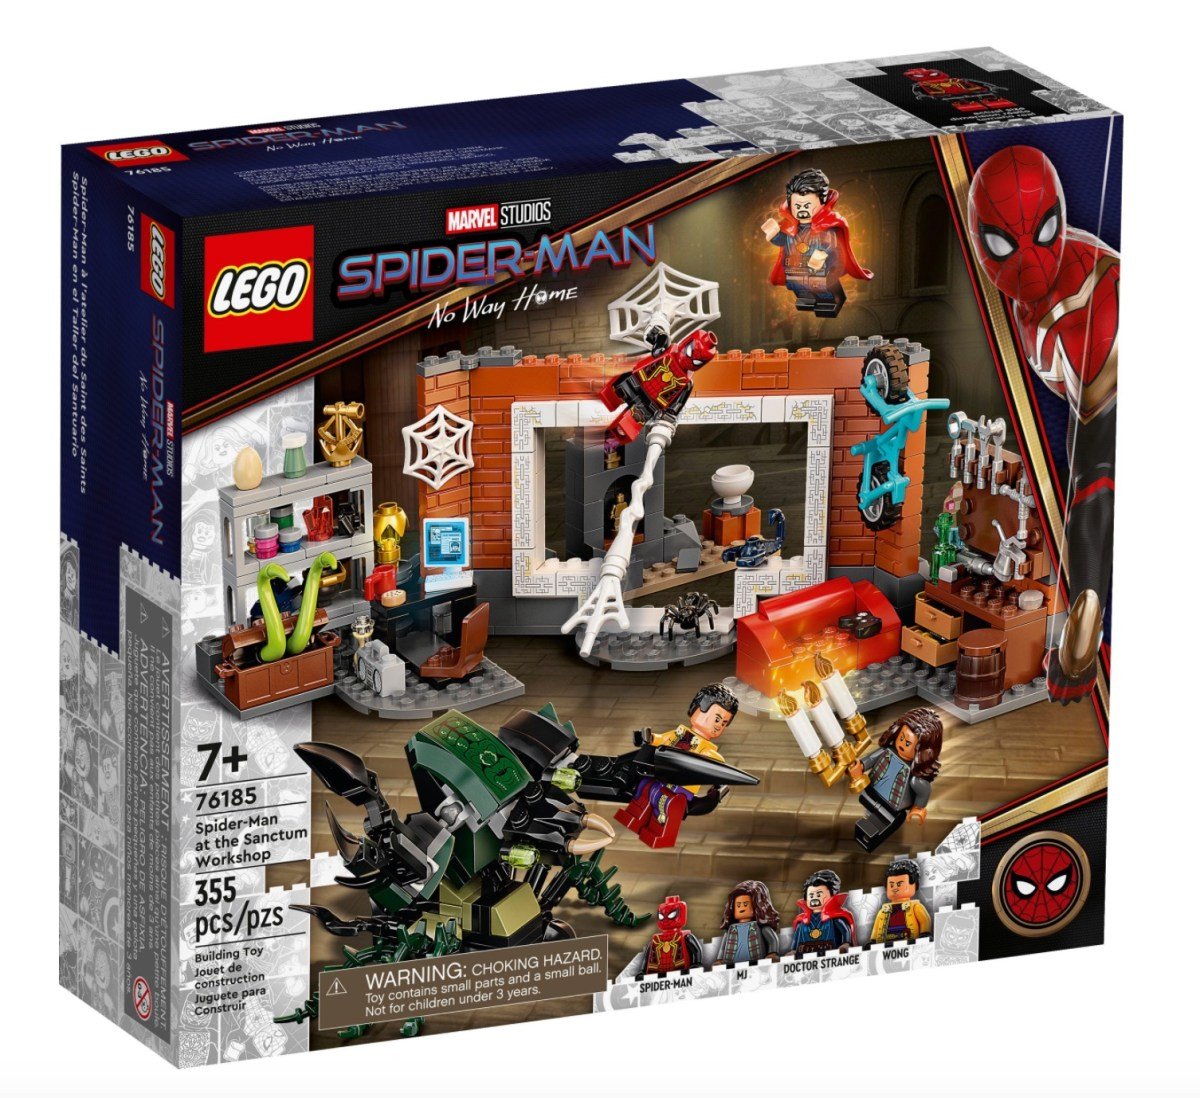 Spider-Man no way home lego set front